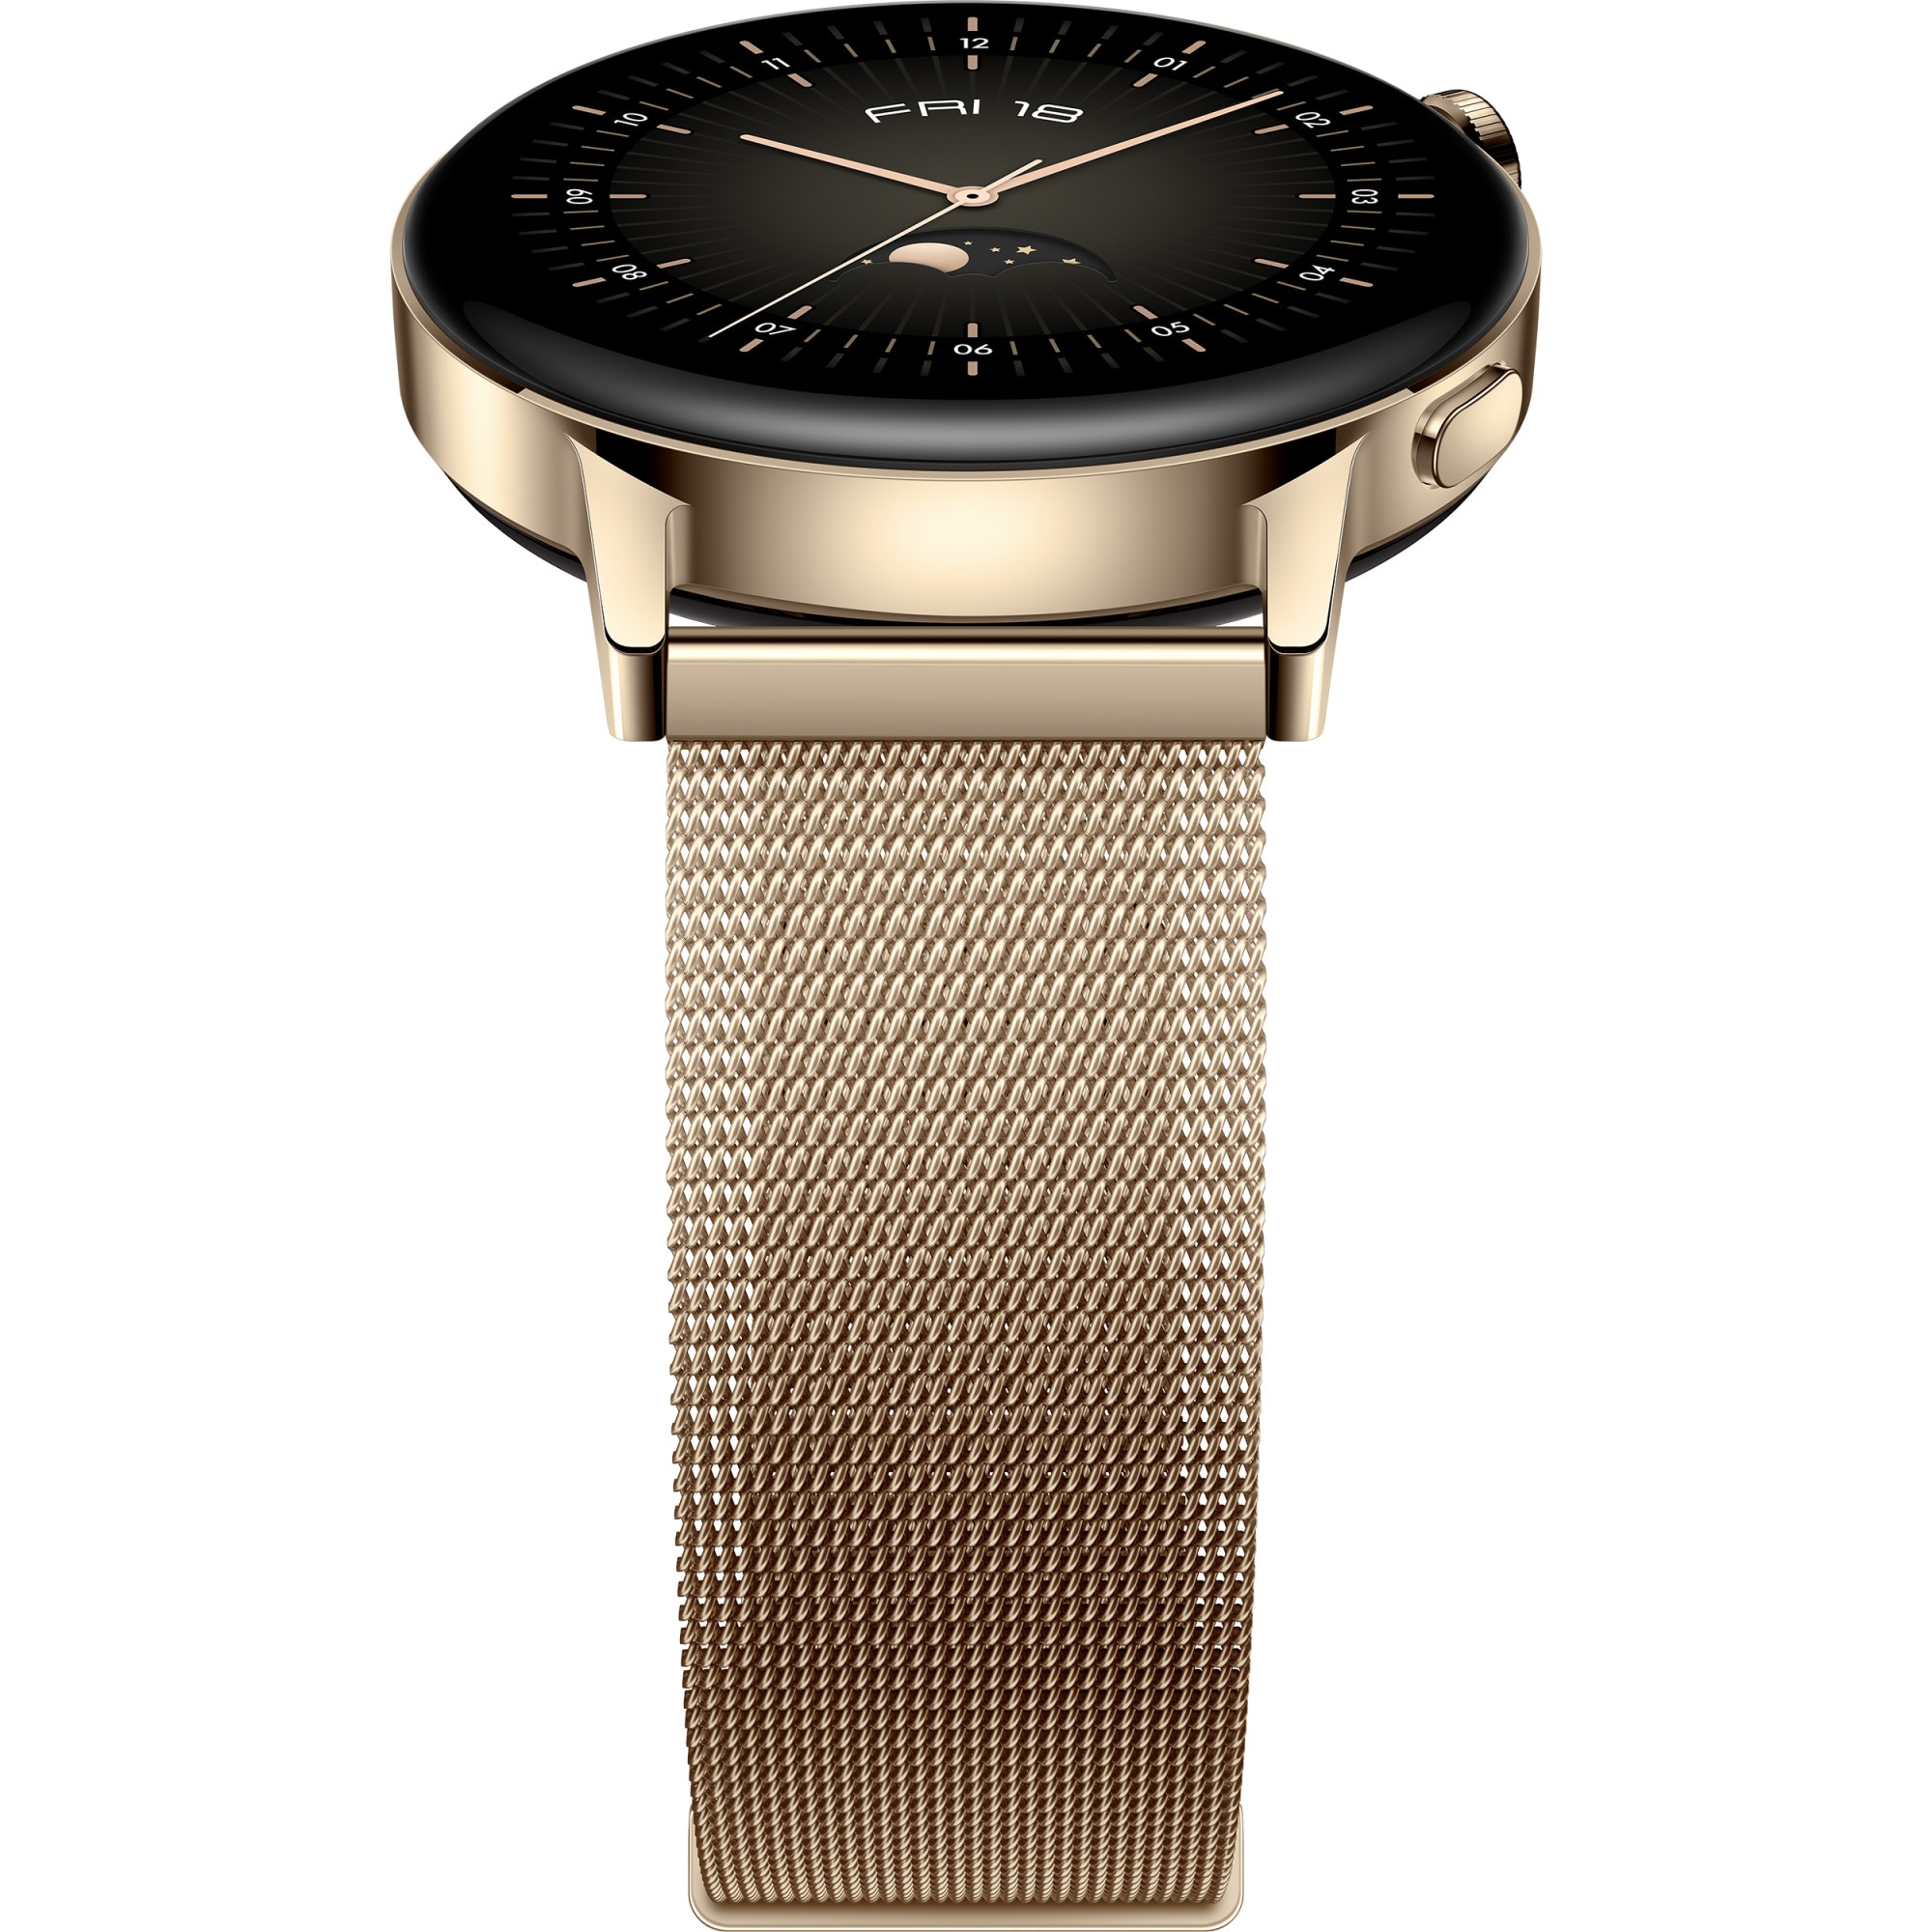 Huawei gt 3 mil b19 gold ss. Huawei watch gt3 42mm. Huawei watch gt 3 Elegant 42mm. Смарт часы Huawei gt-3 mil-b19 42мм черный. Умные часы Huawei gt-3 mil-b19 42мм золотистый.